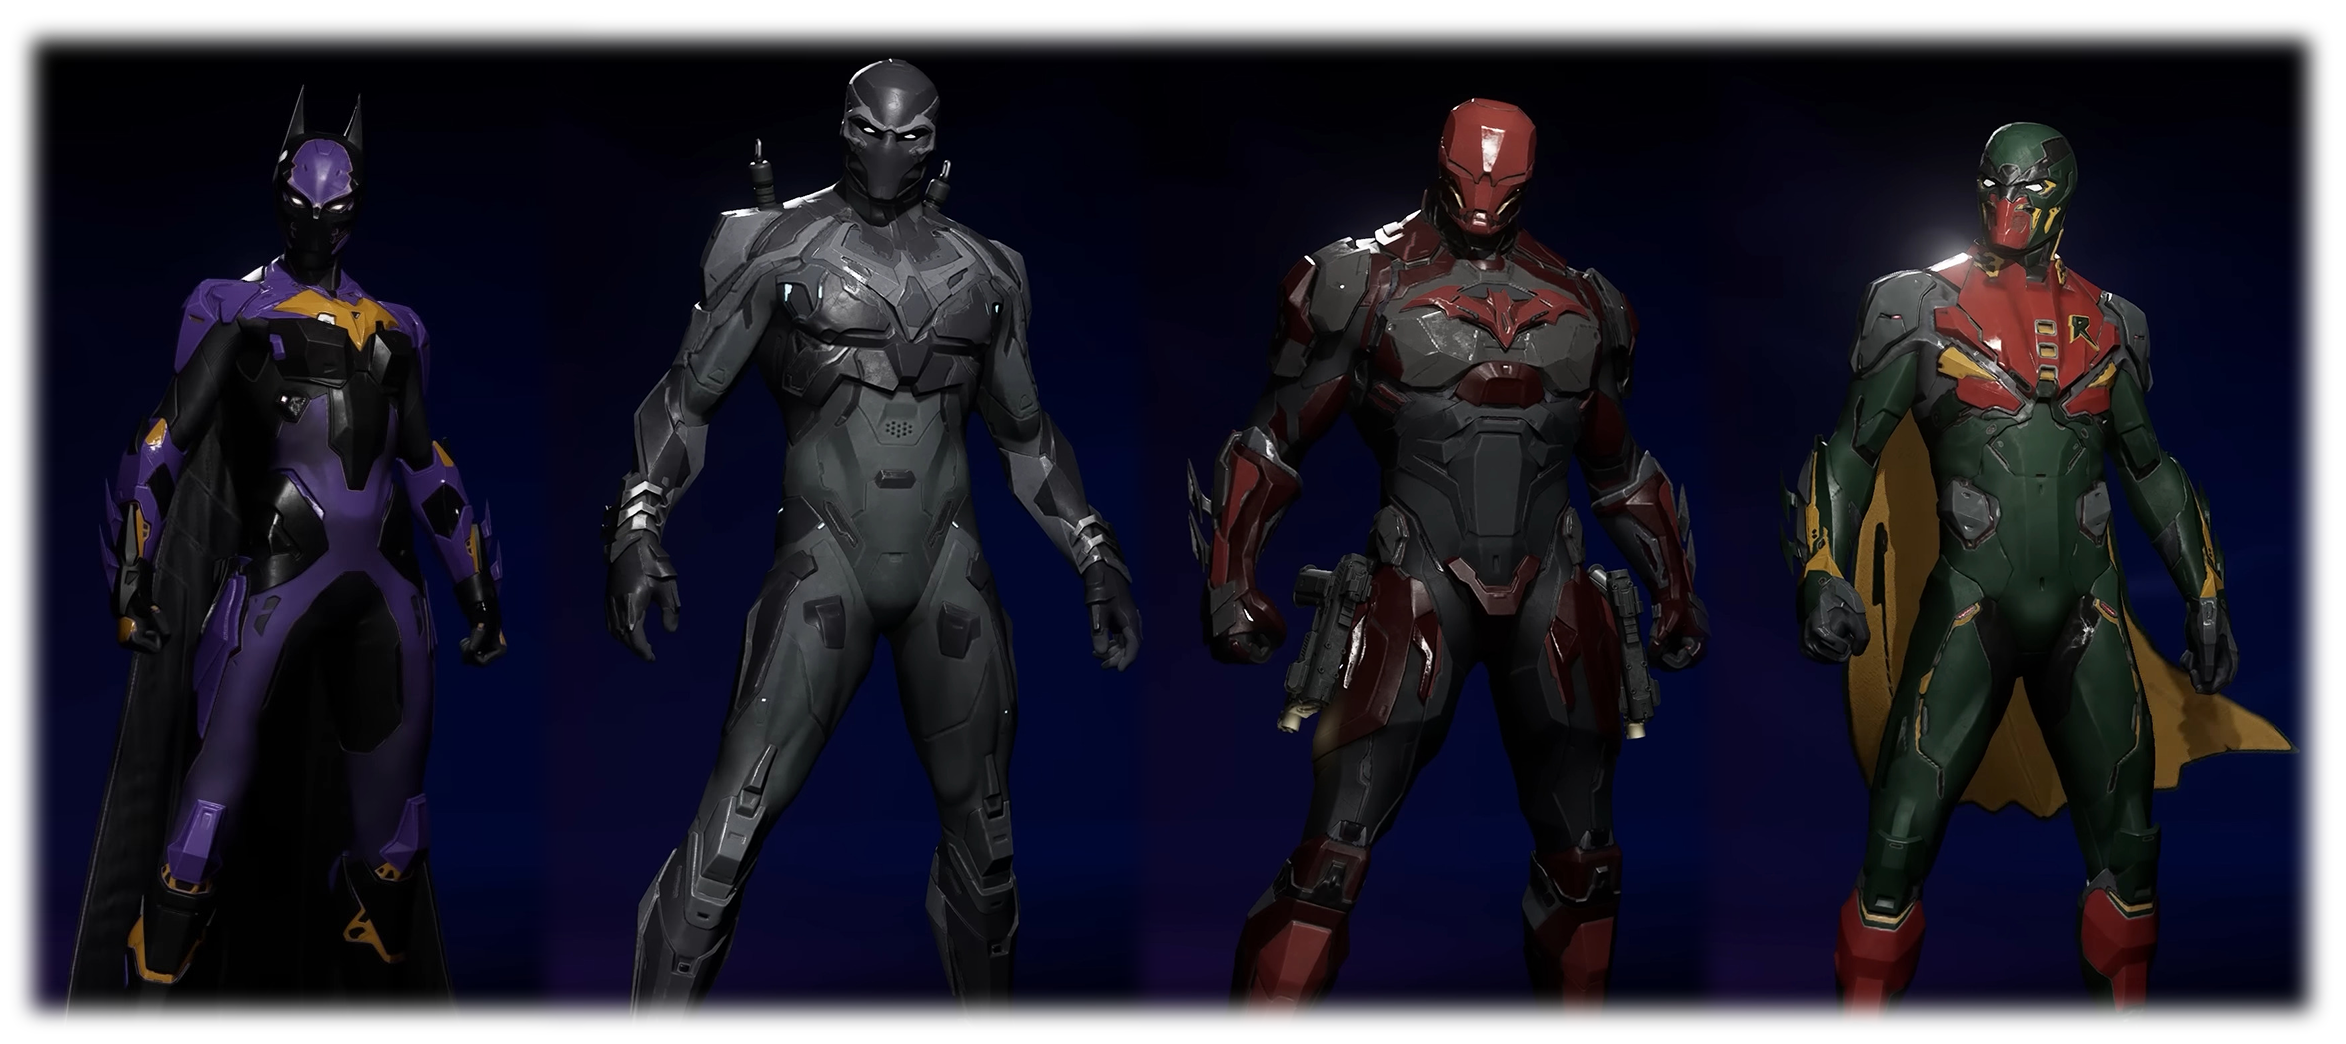 Fan Made Iron Man Suit Made of Metal! - Iron Man Helmet Shop